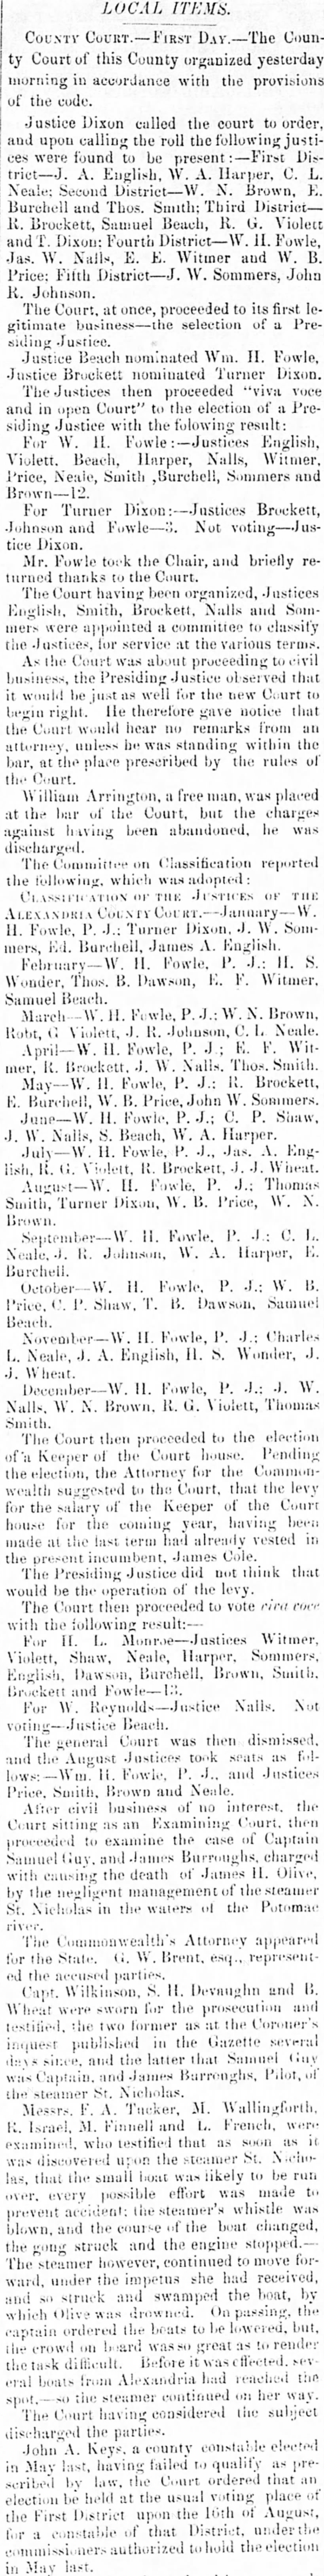 Alexandria Court organize Tues Aug 7, 1860 Alexandria Gazette 
Samuel Beach